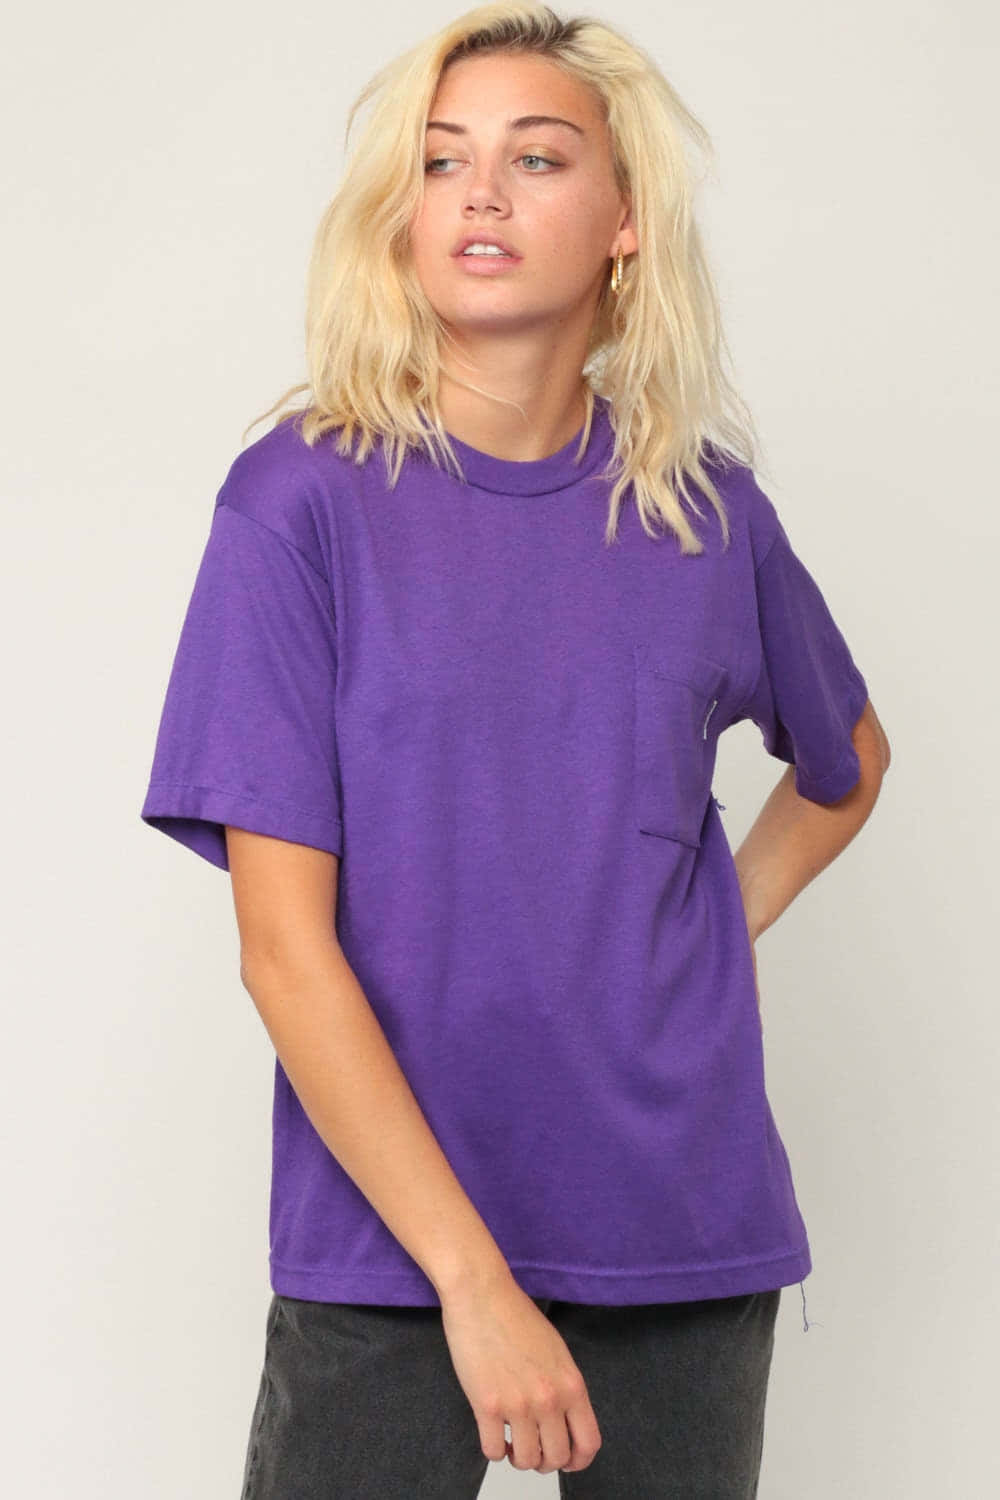 Download Stylish Purple Shirt Wallpaper | Wallpapers.com